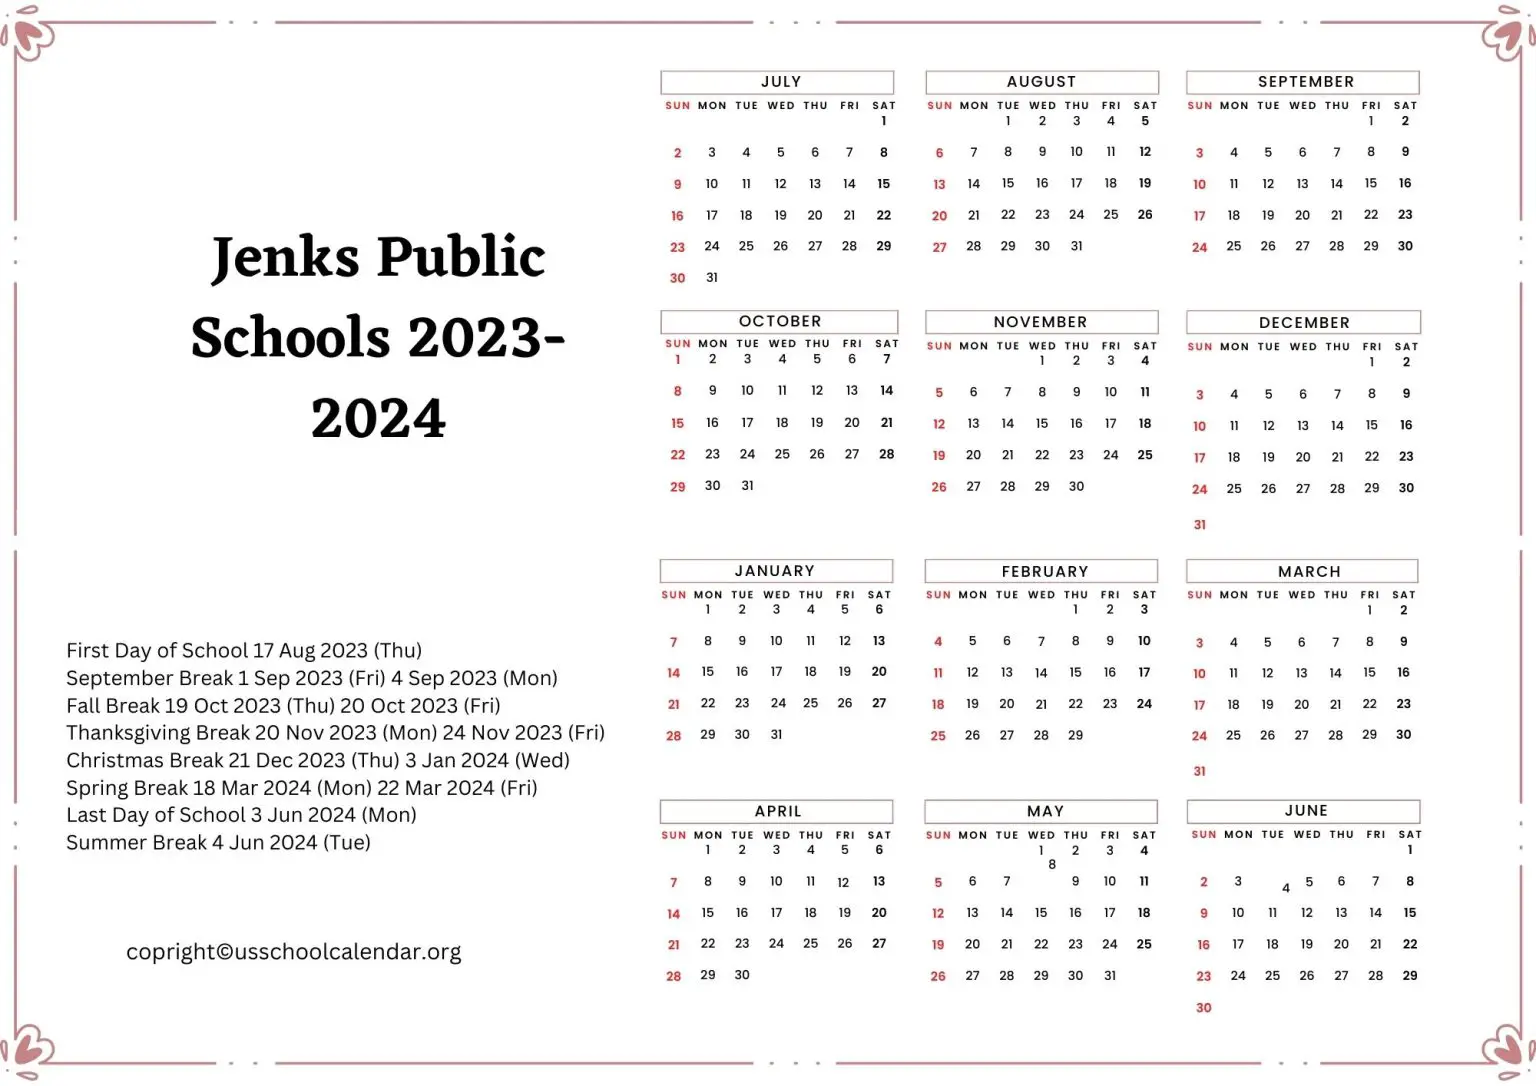 jenks-public-schools-calendar-with-holidays-2023-2024